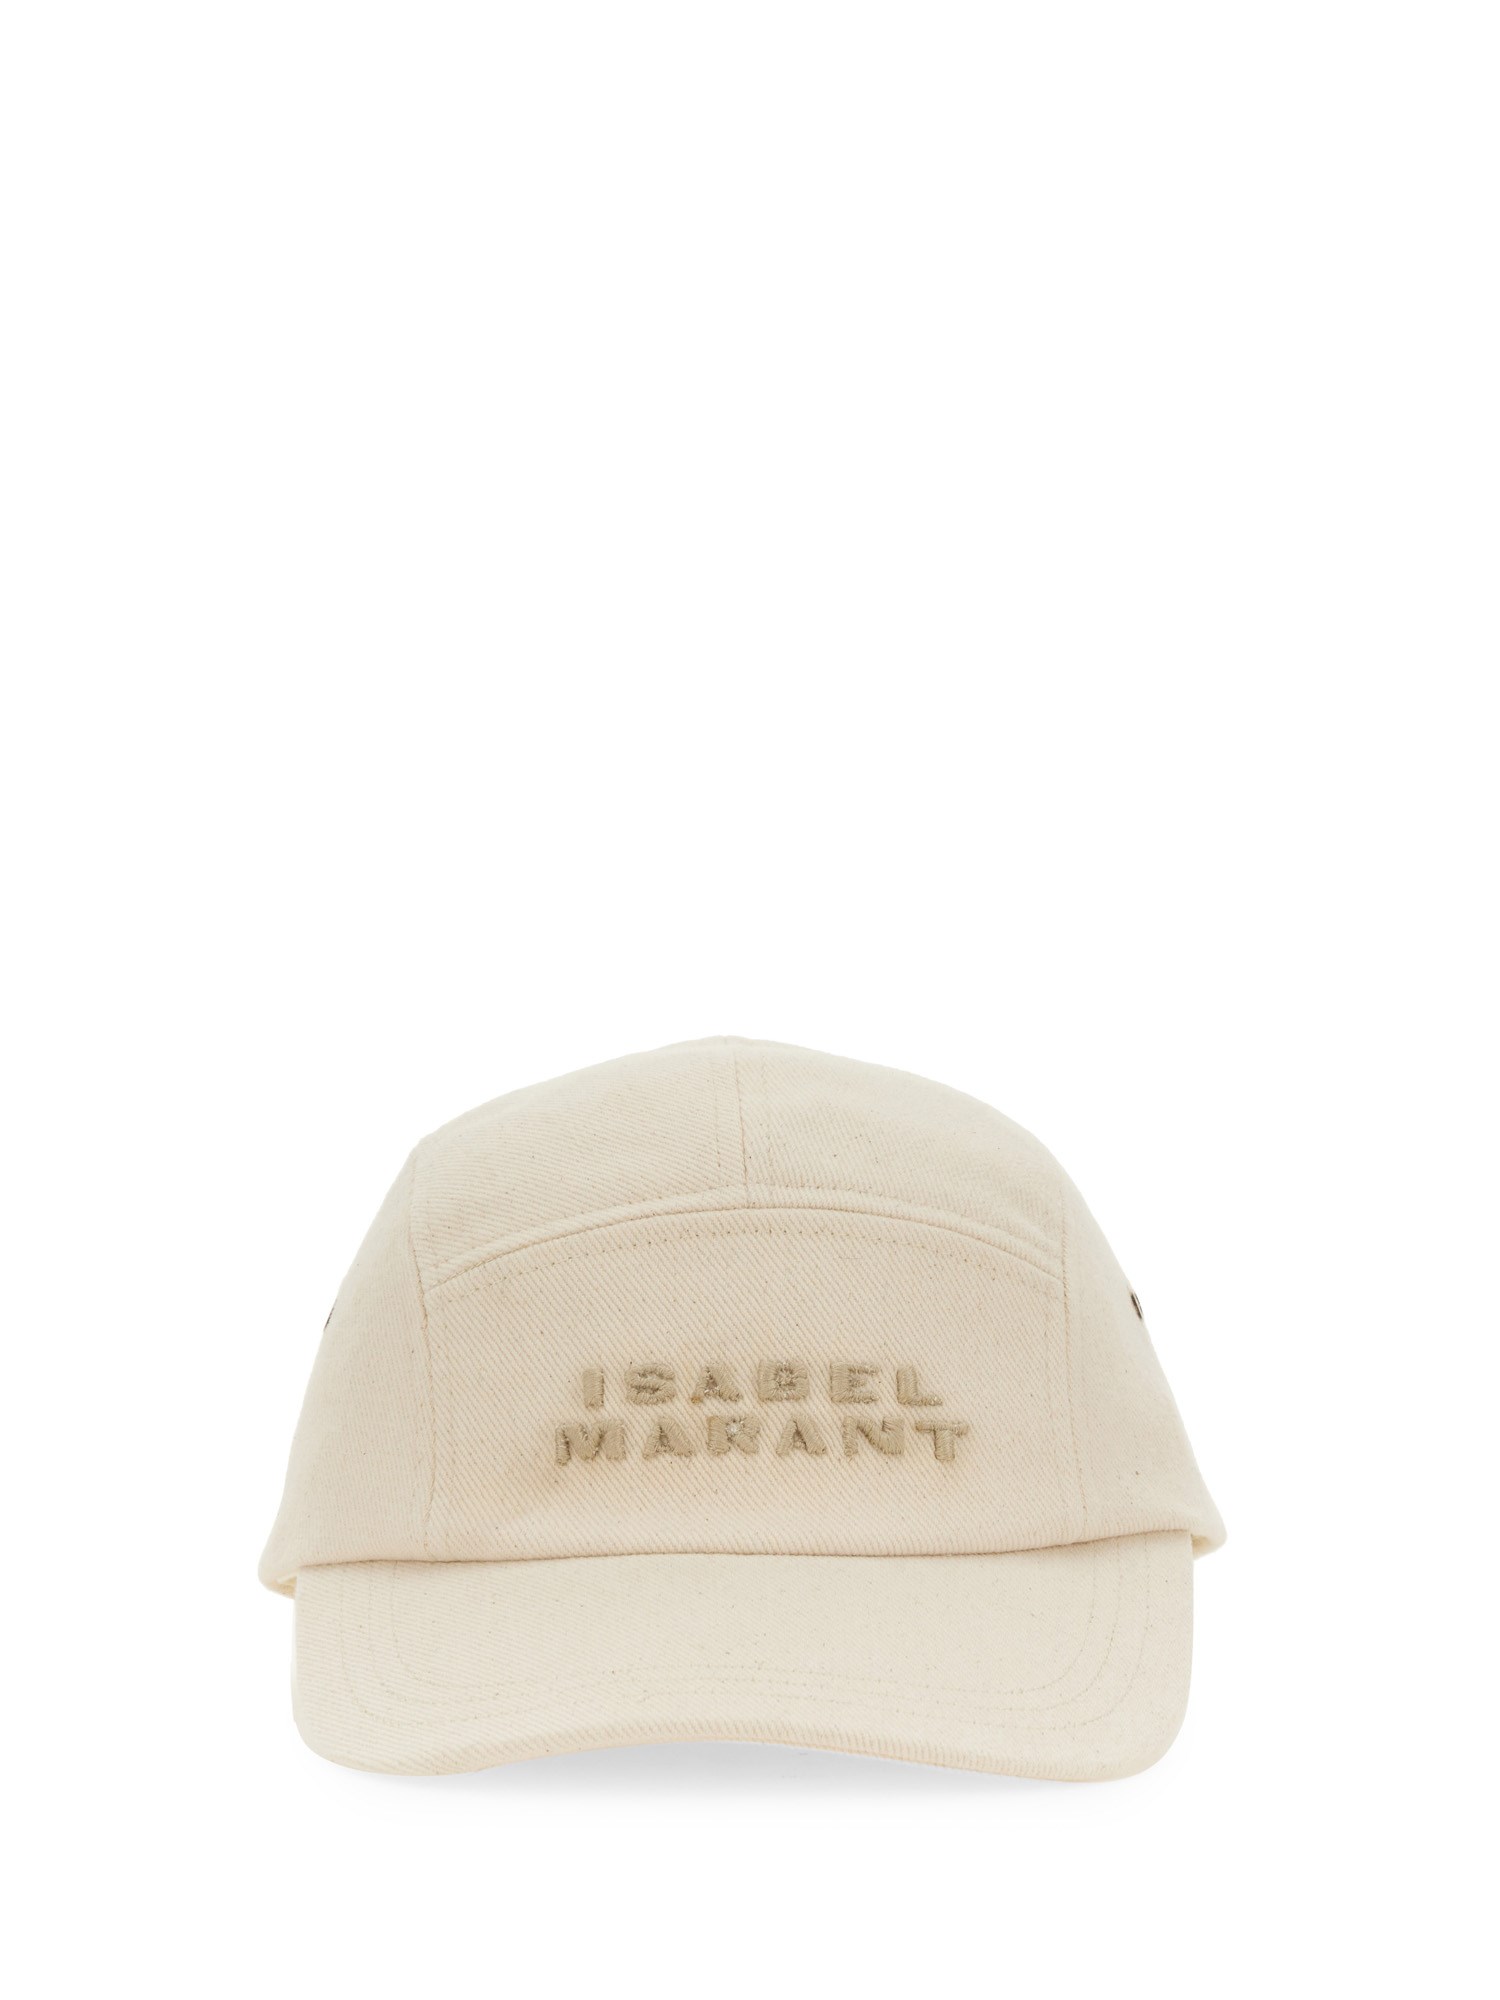 isabel marant hat with logo